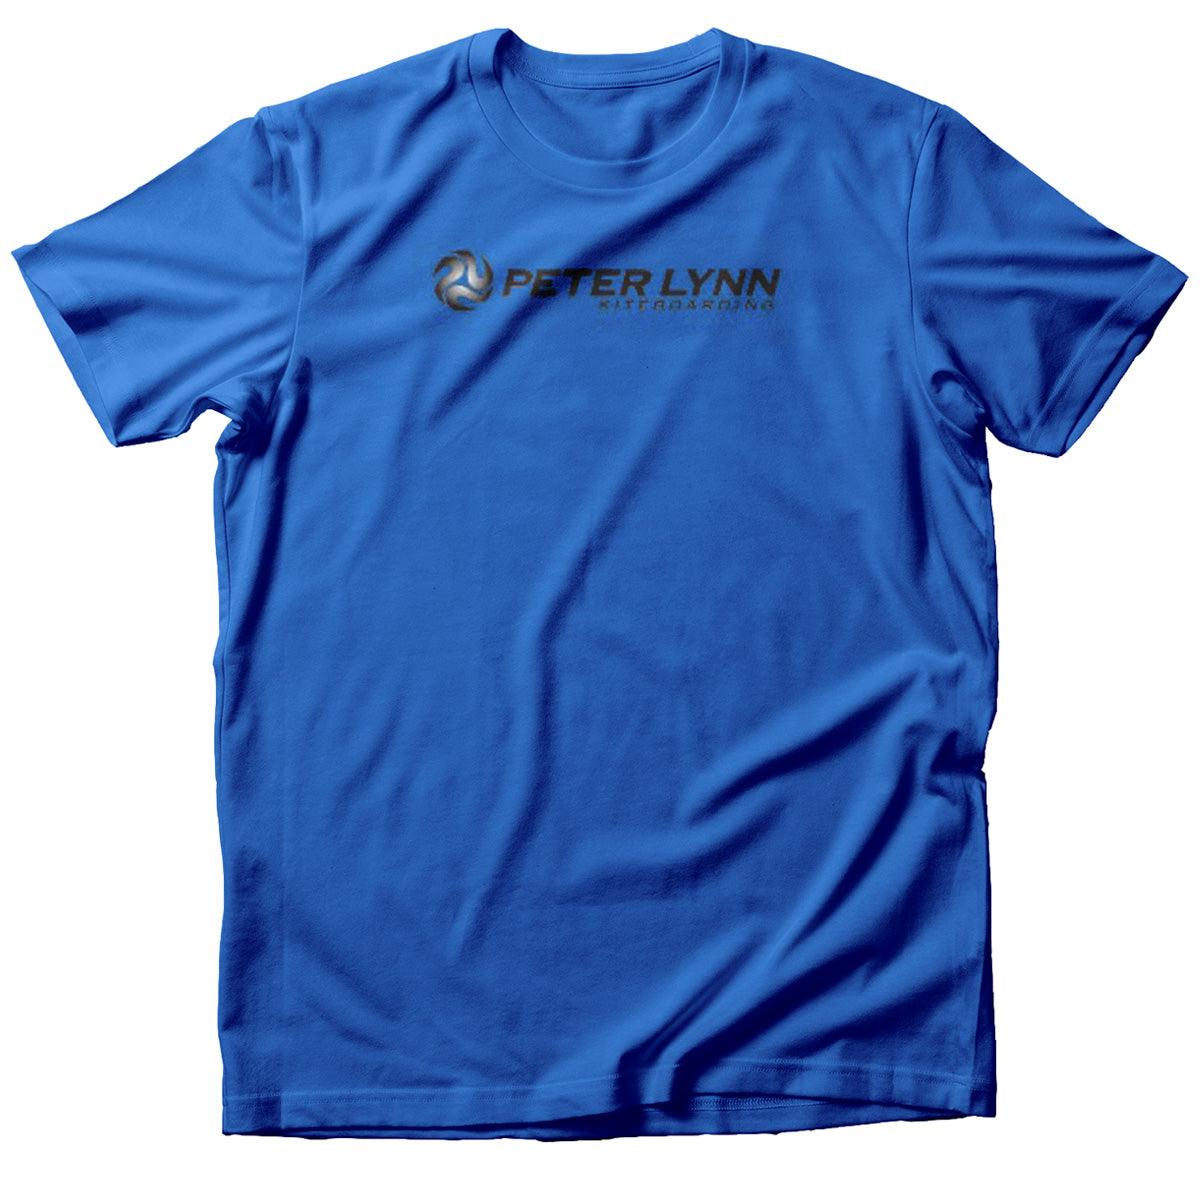 Peter Lynn Phantom T-Shirt - Kiteshop.com